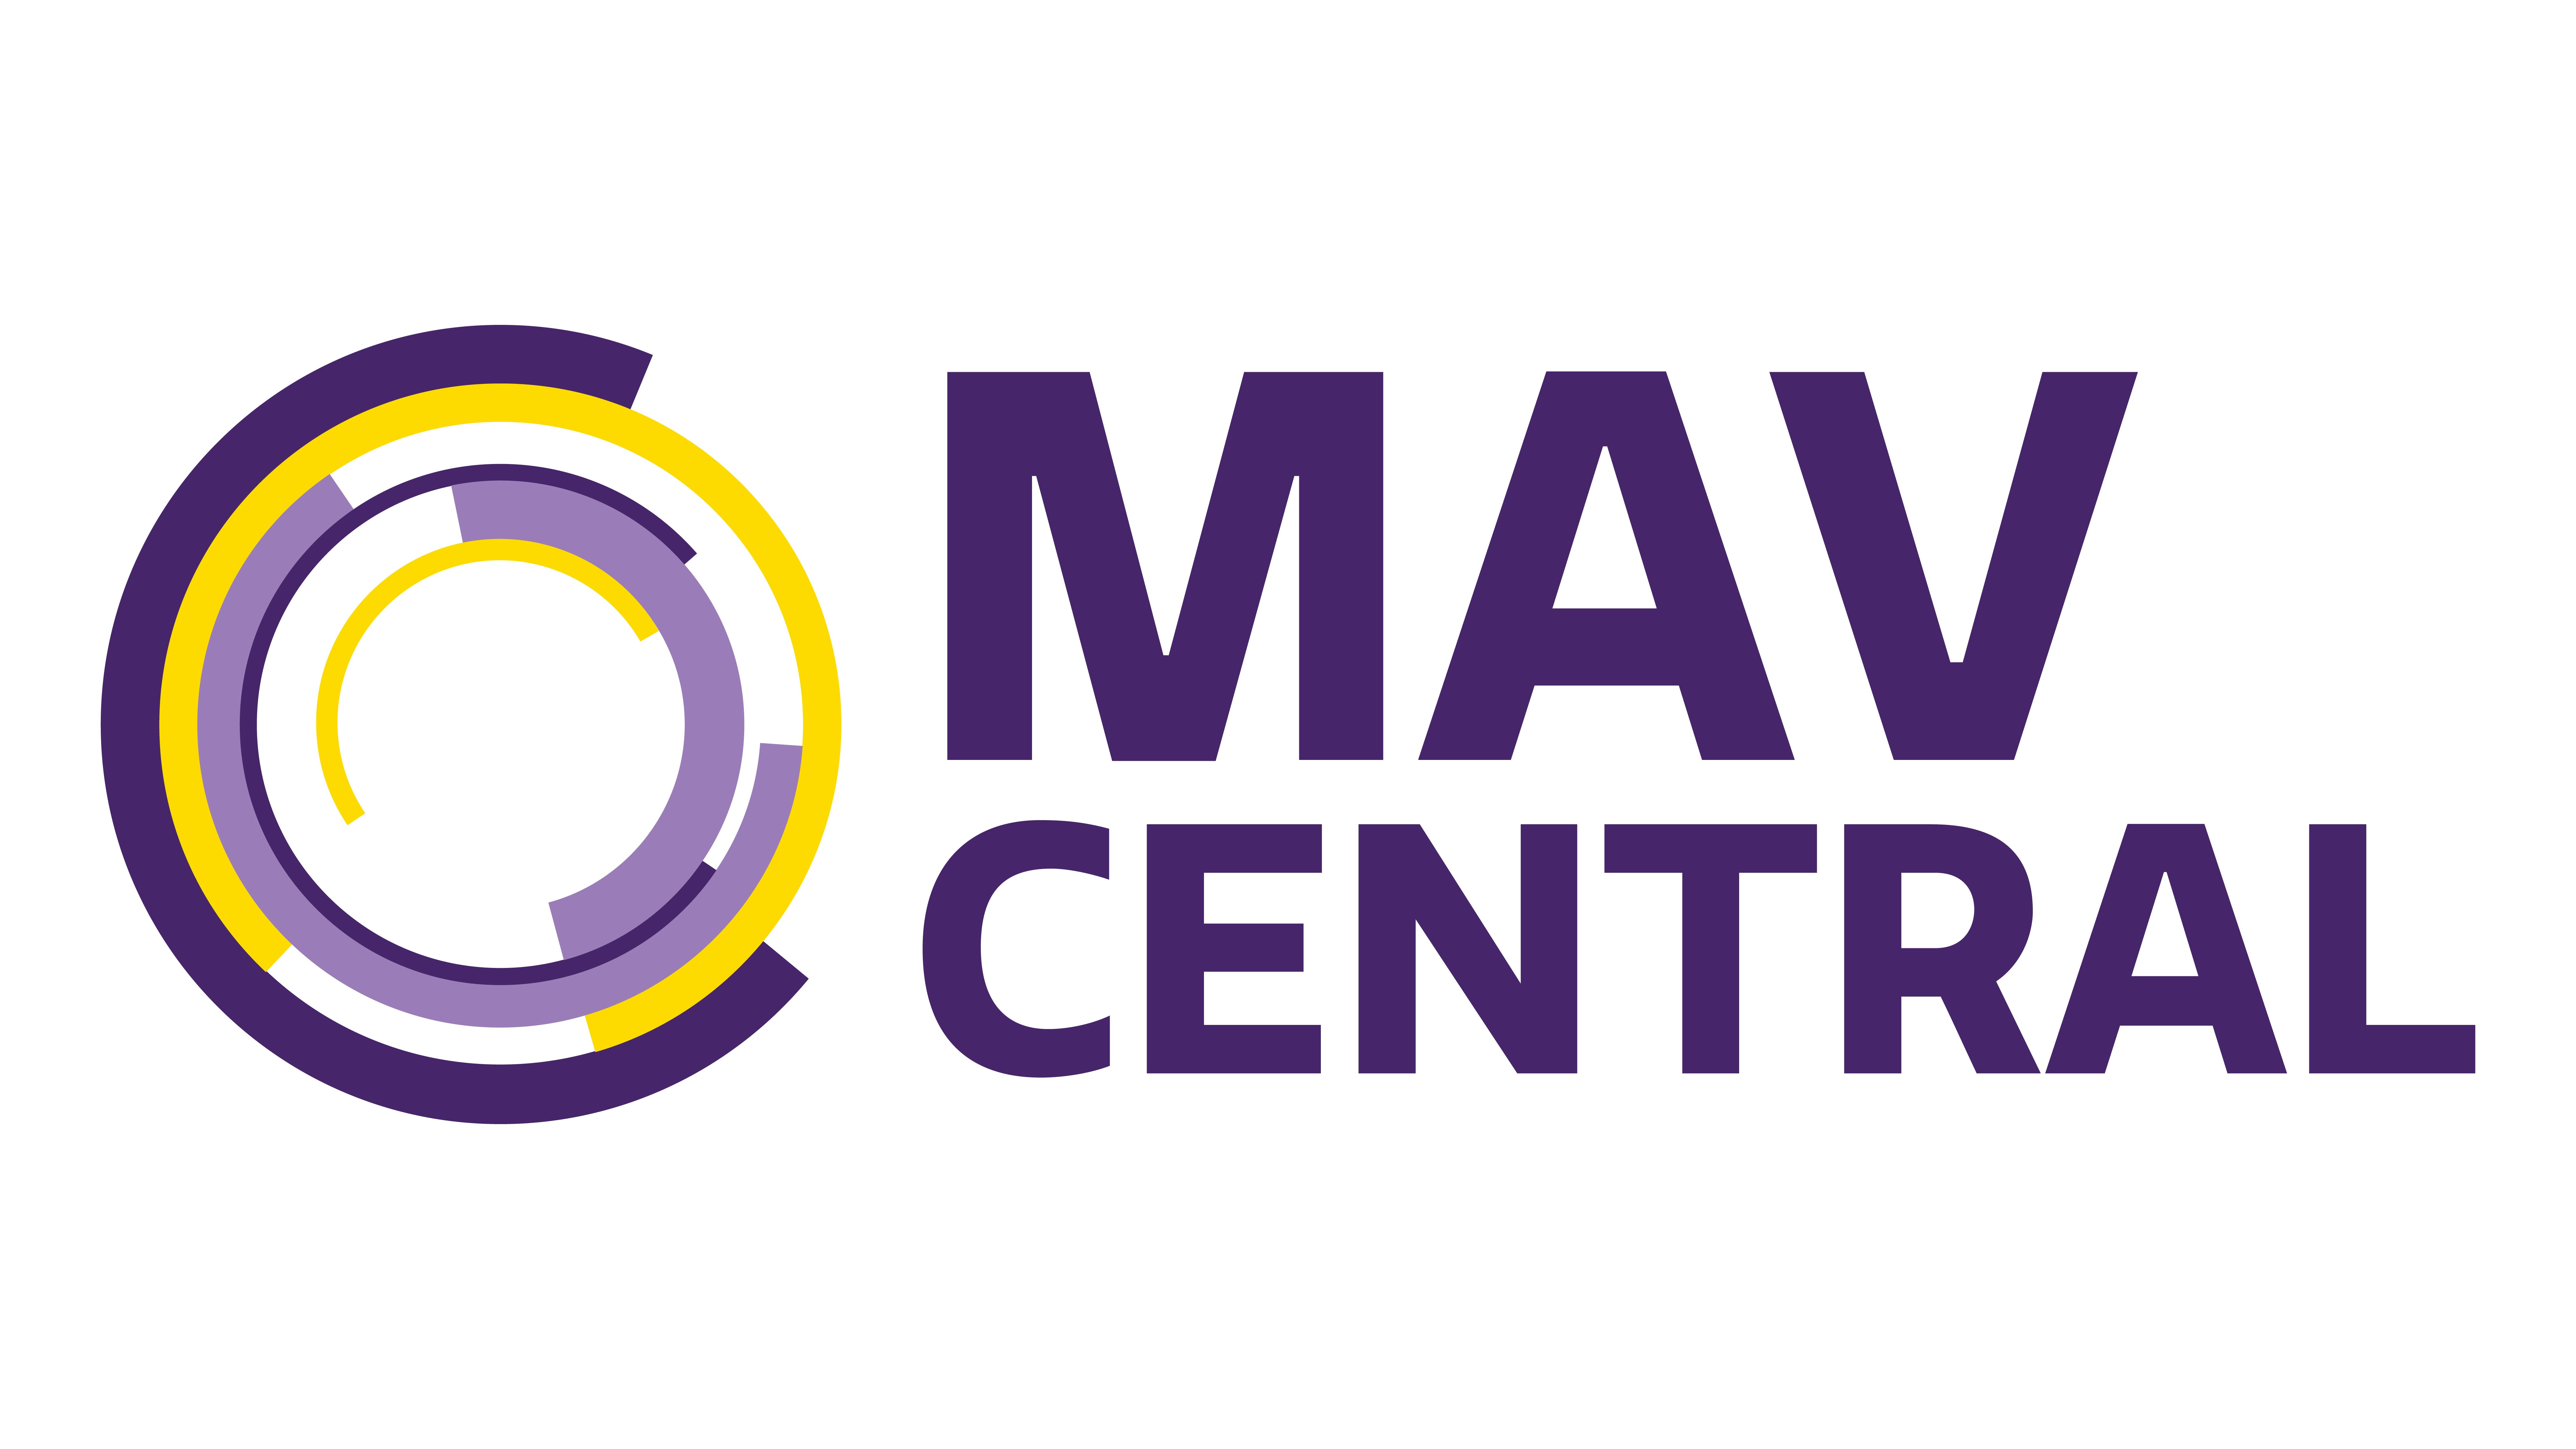 Mav Central logo with link